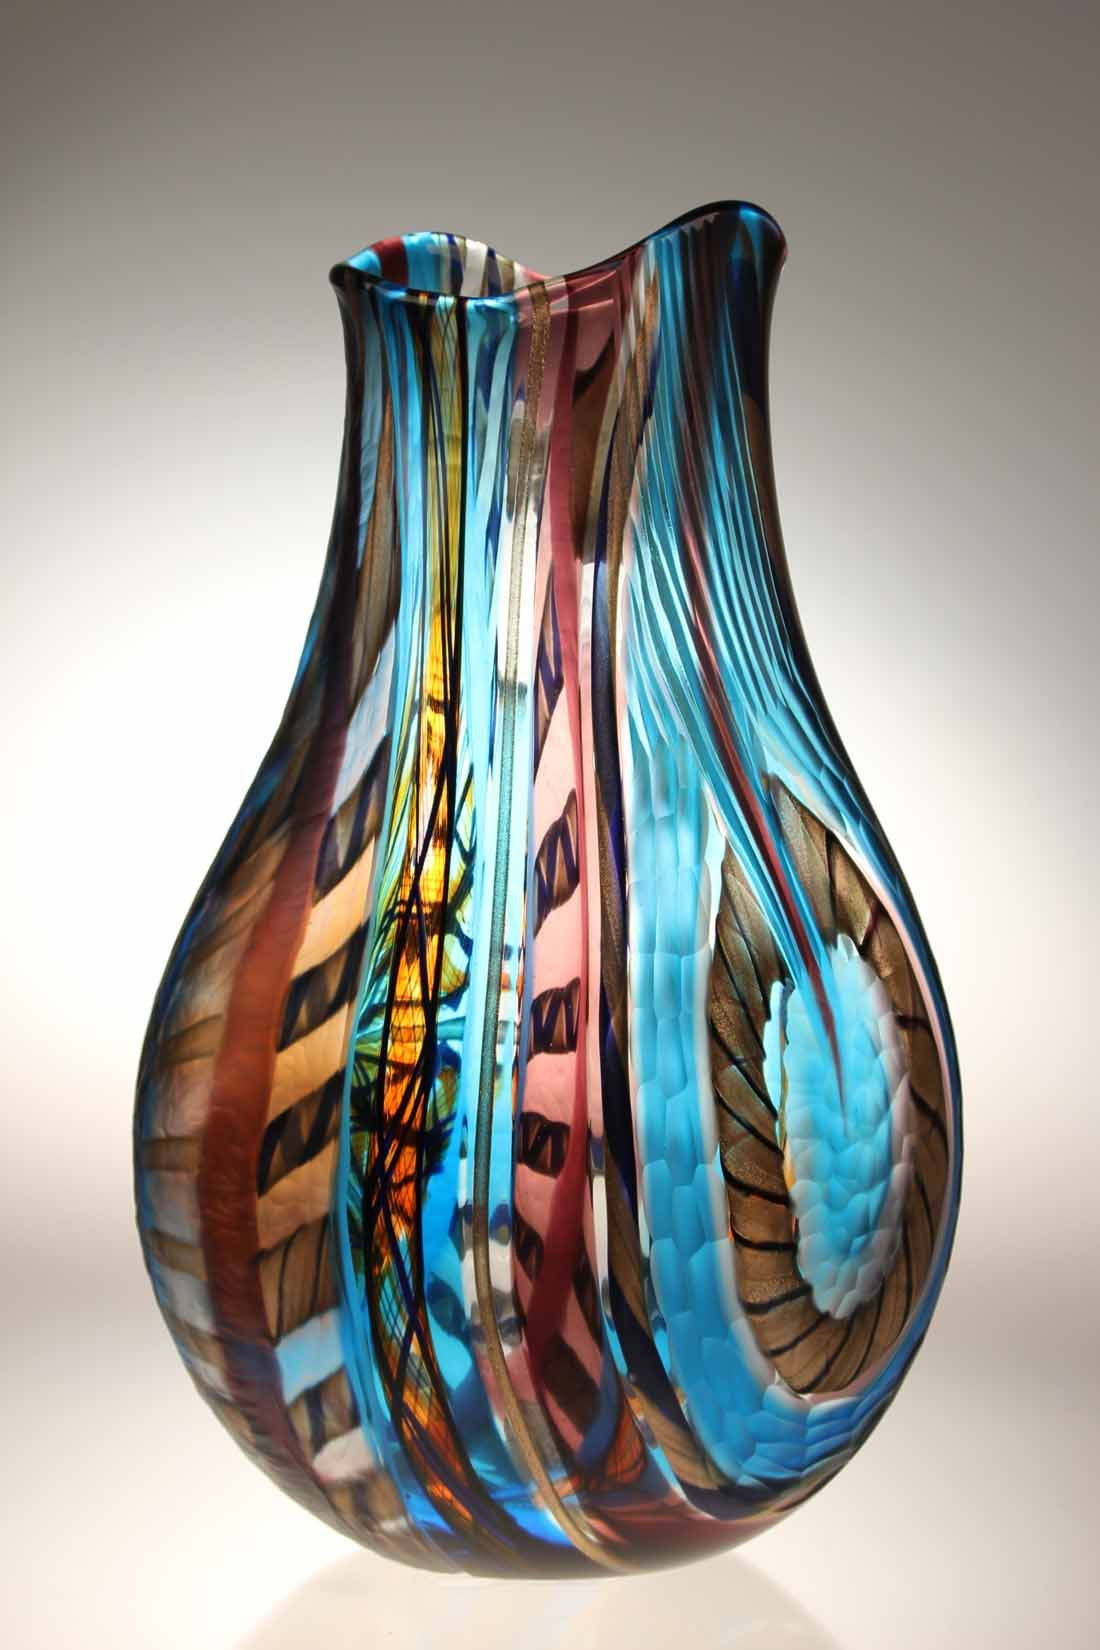 14 Spectacular Murano Glass Fish Vase 2024 free download murano glass fish vase of murano glass studio vase notabilioso 2 reverse glass art within murano glass studio vase notabilioso 2 reverse